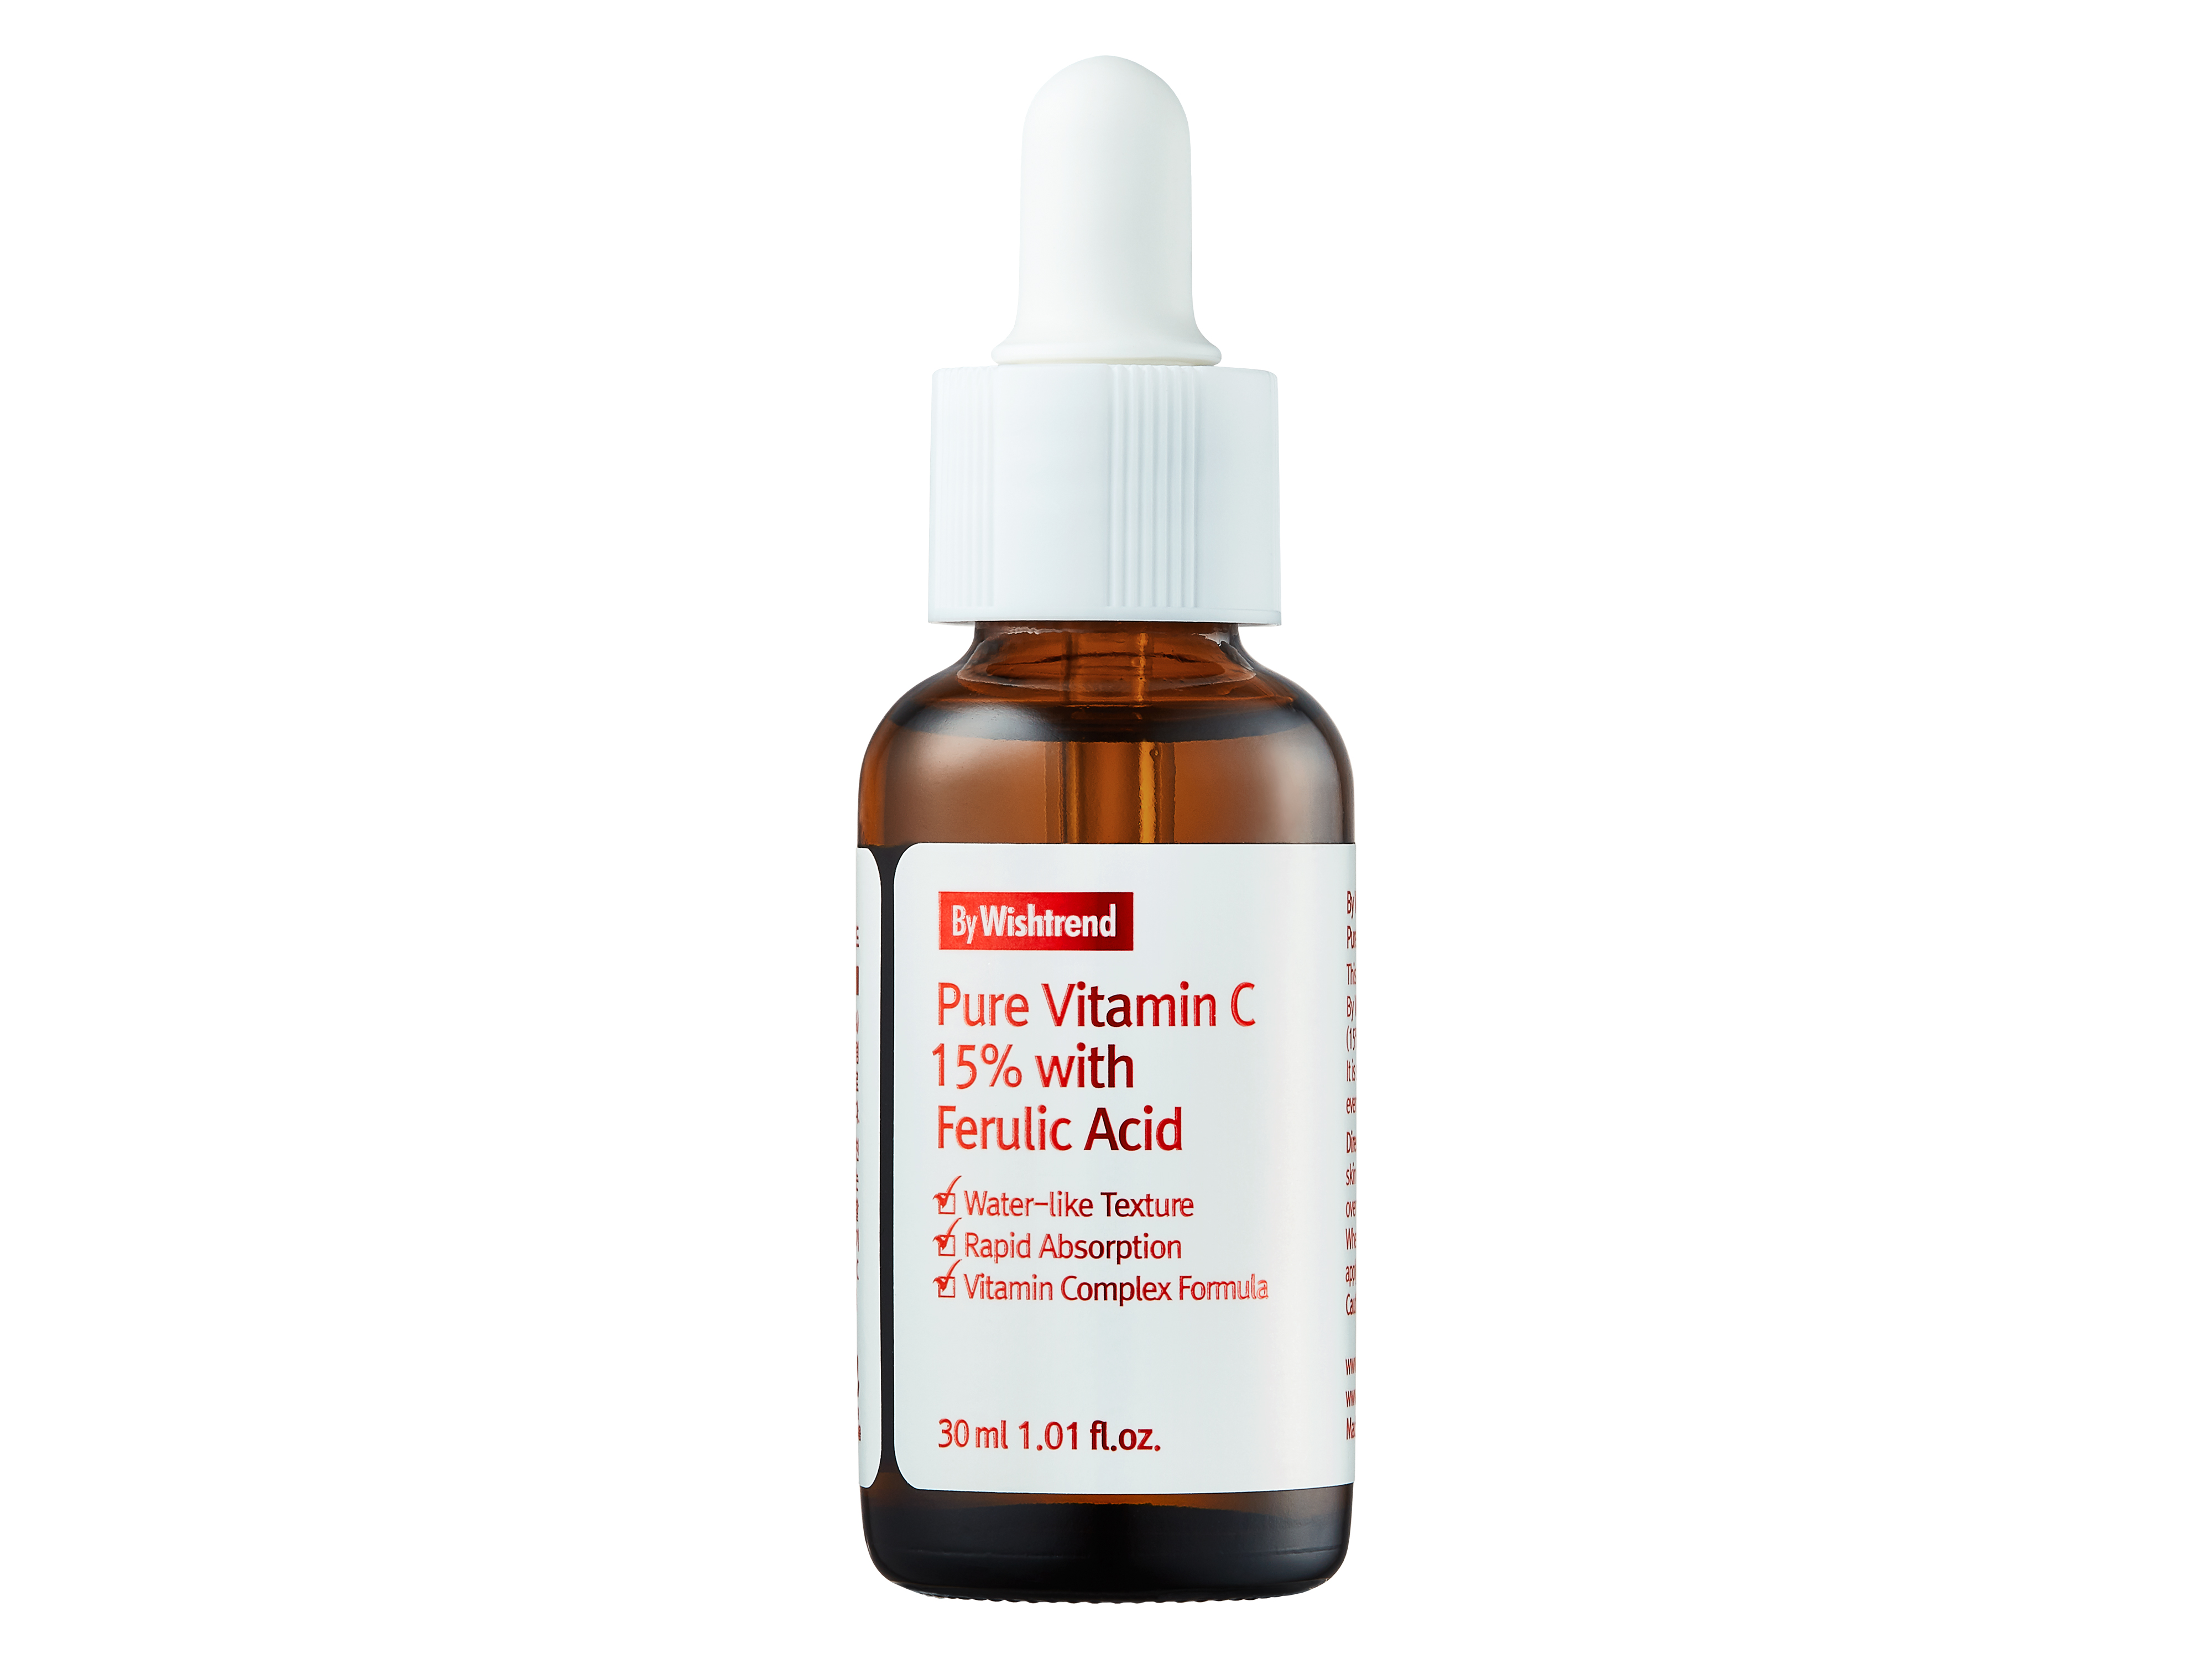 By Wishtrend Pure Vitamin C 15% with Ferulic Acid, 30 ml